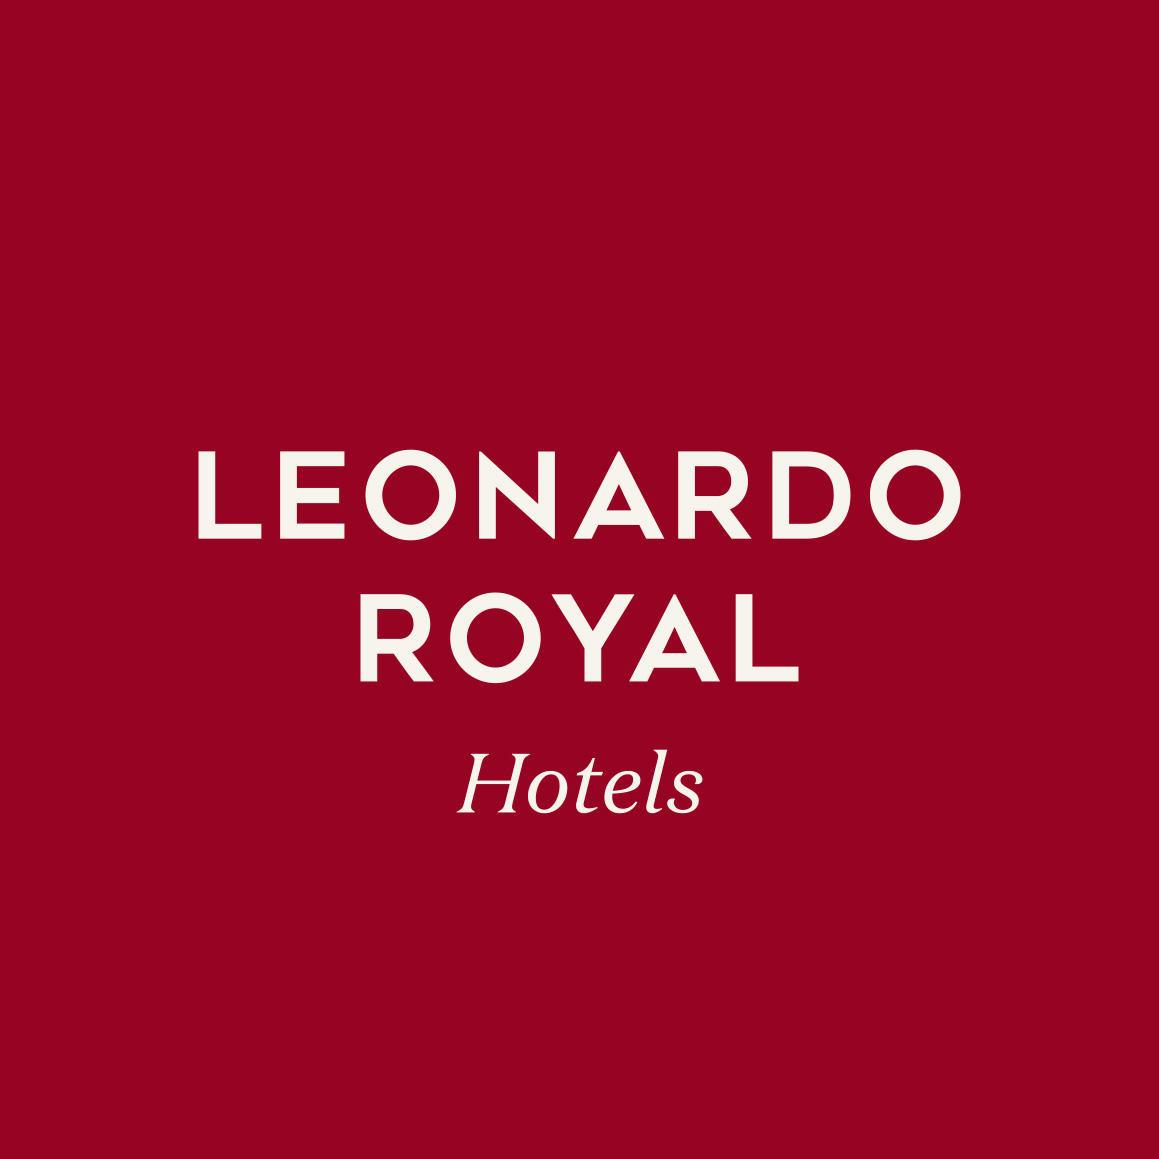 Leonardo Royal Hotel London City - London, London EC3N 2BQ - 020 7863 3700 | ShowMeLocal.com